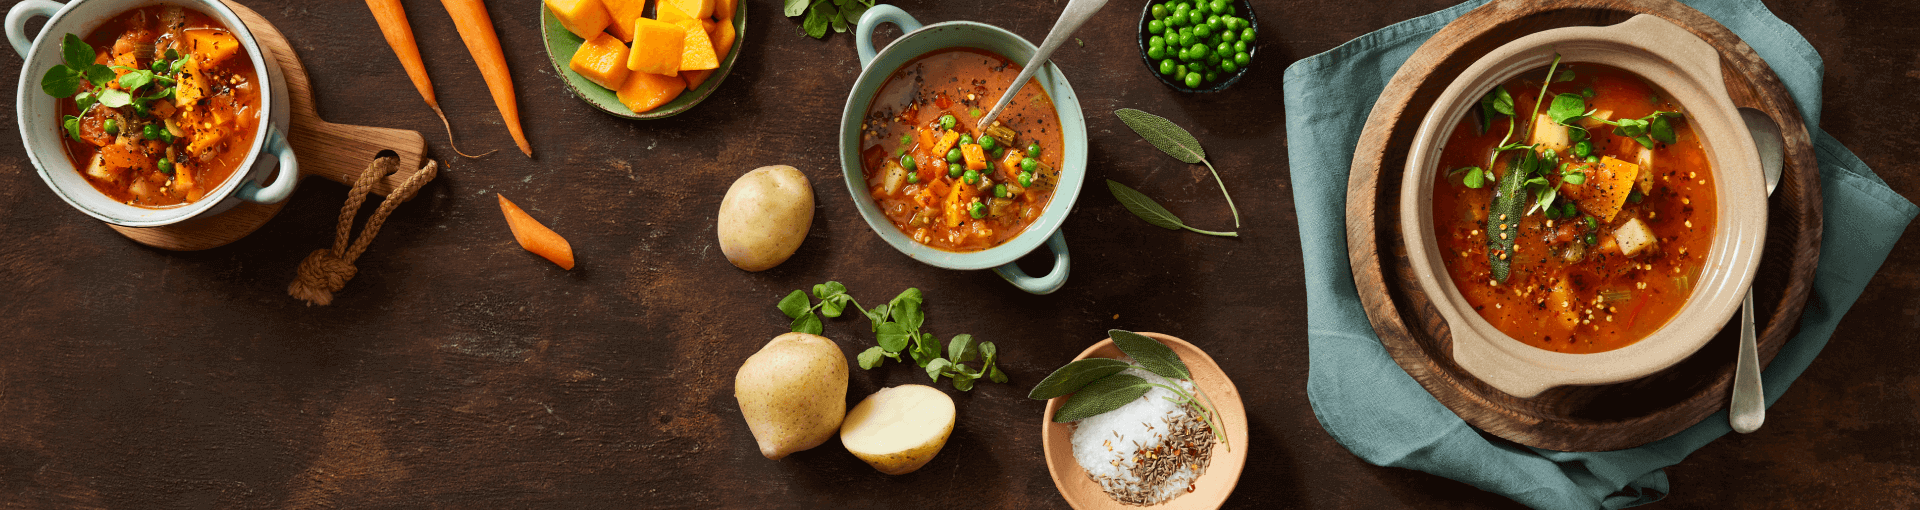 Zanele’s Root Vegetable Soup